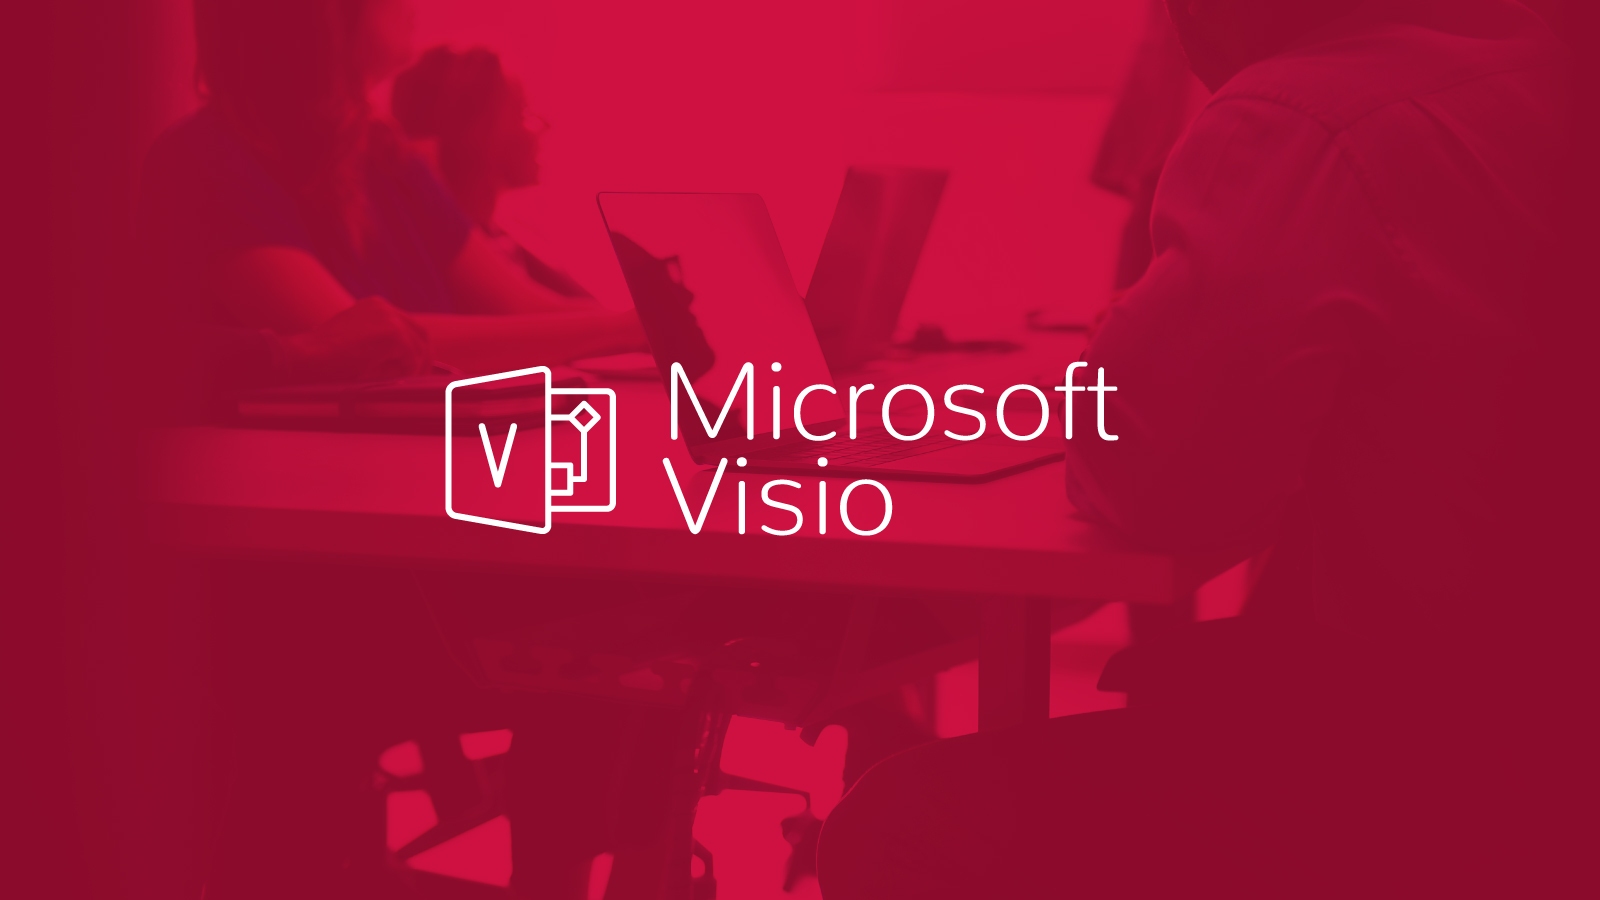 Microsoft - Microsoft Visio